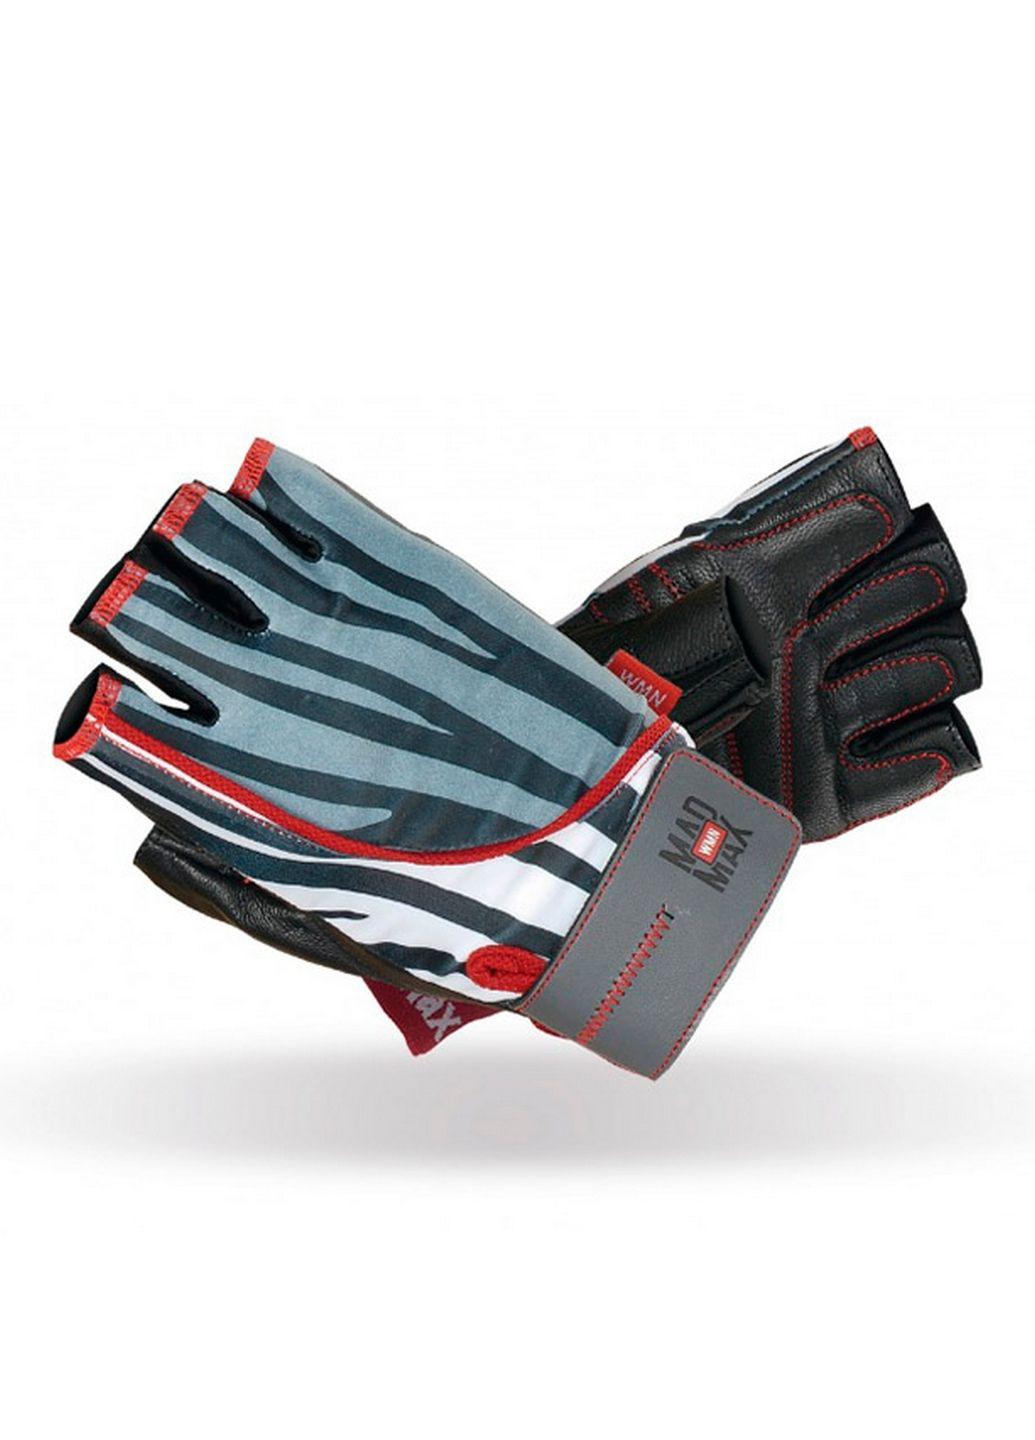 Перчатки для фитнеса Nine-eleven MFG 911 Mad Max (293482530)